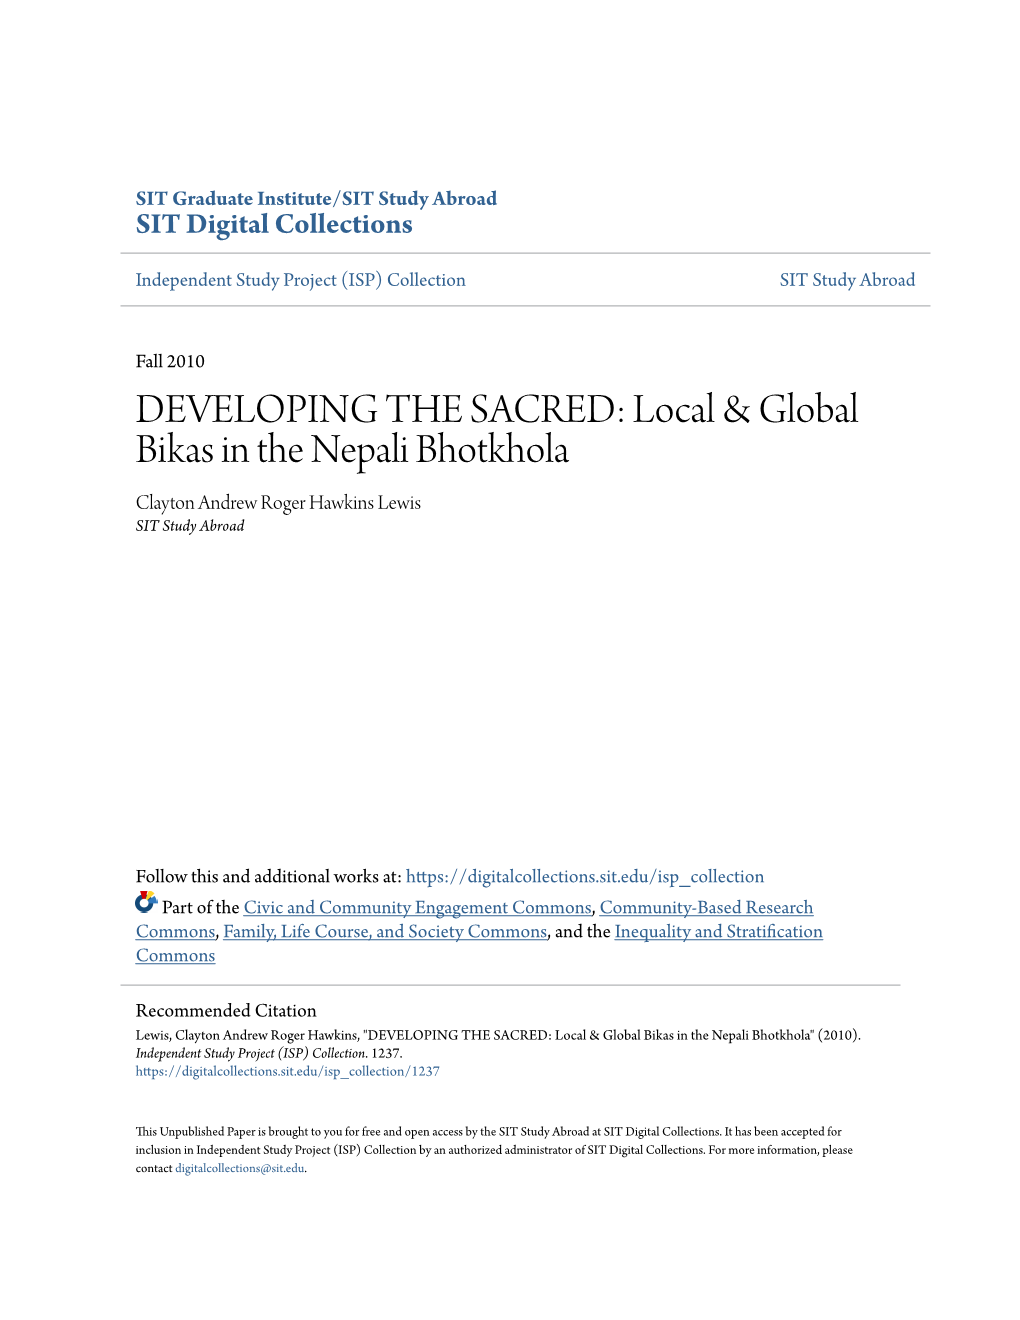 Local & Global Bikas in the Nepali Bhotkhola